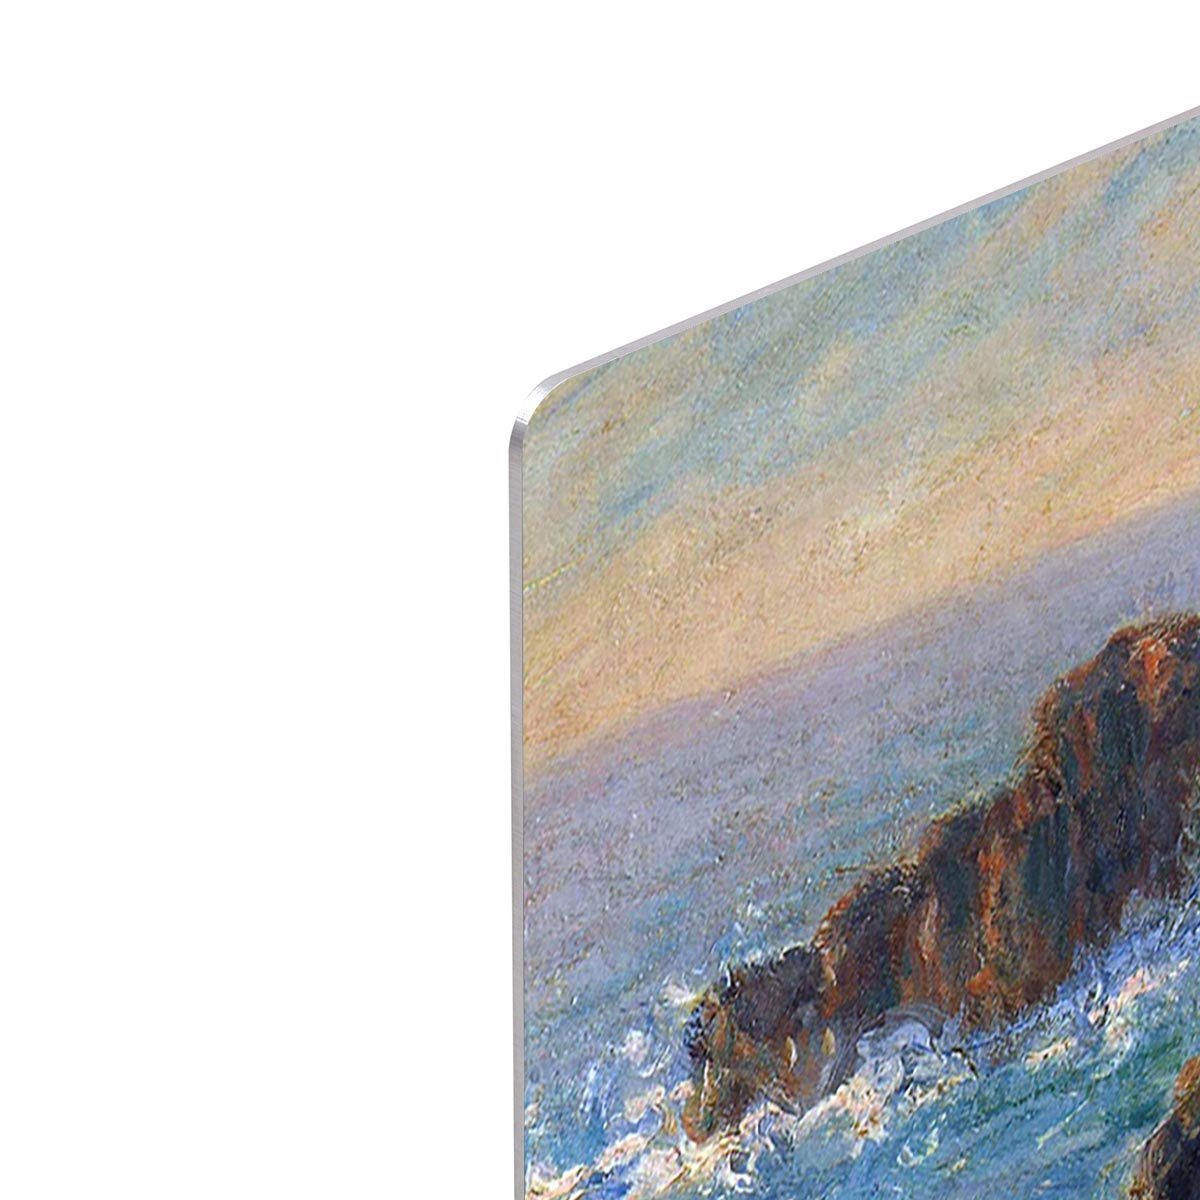 Rocky peaks at the Belle Ile by Monet HD Metal Print